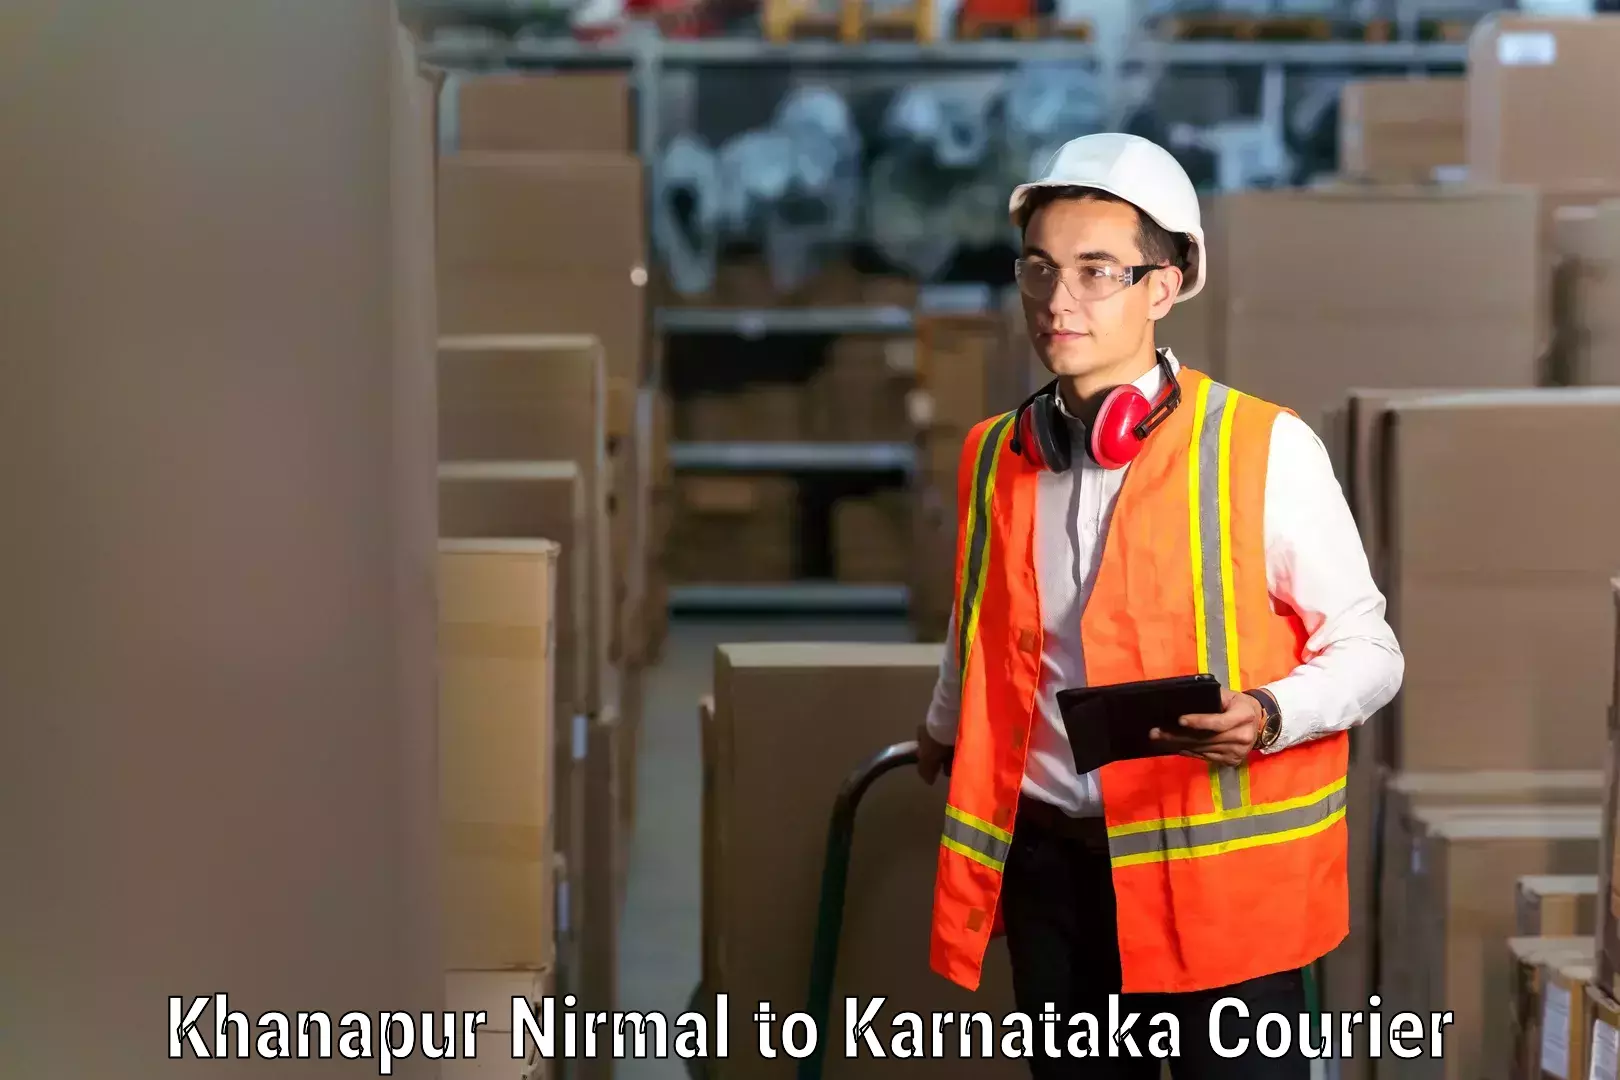 Professional furniture movers Khanapur Nirmal to Karnataka